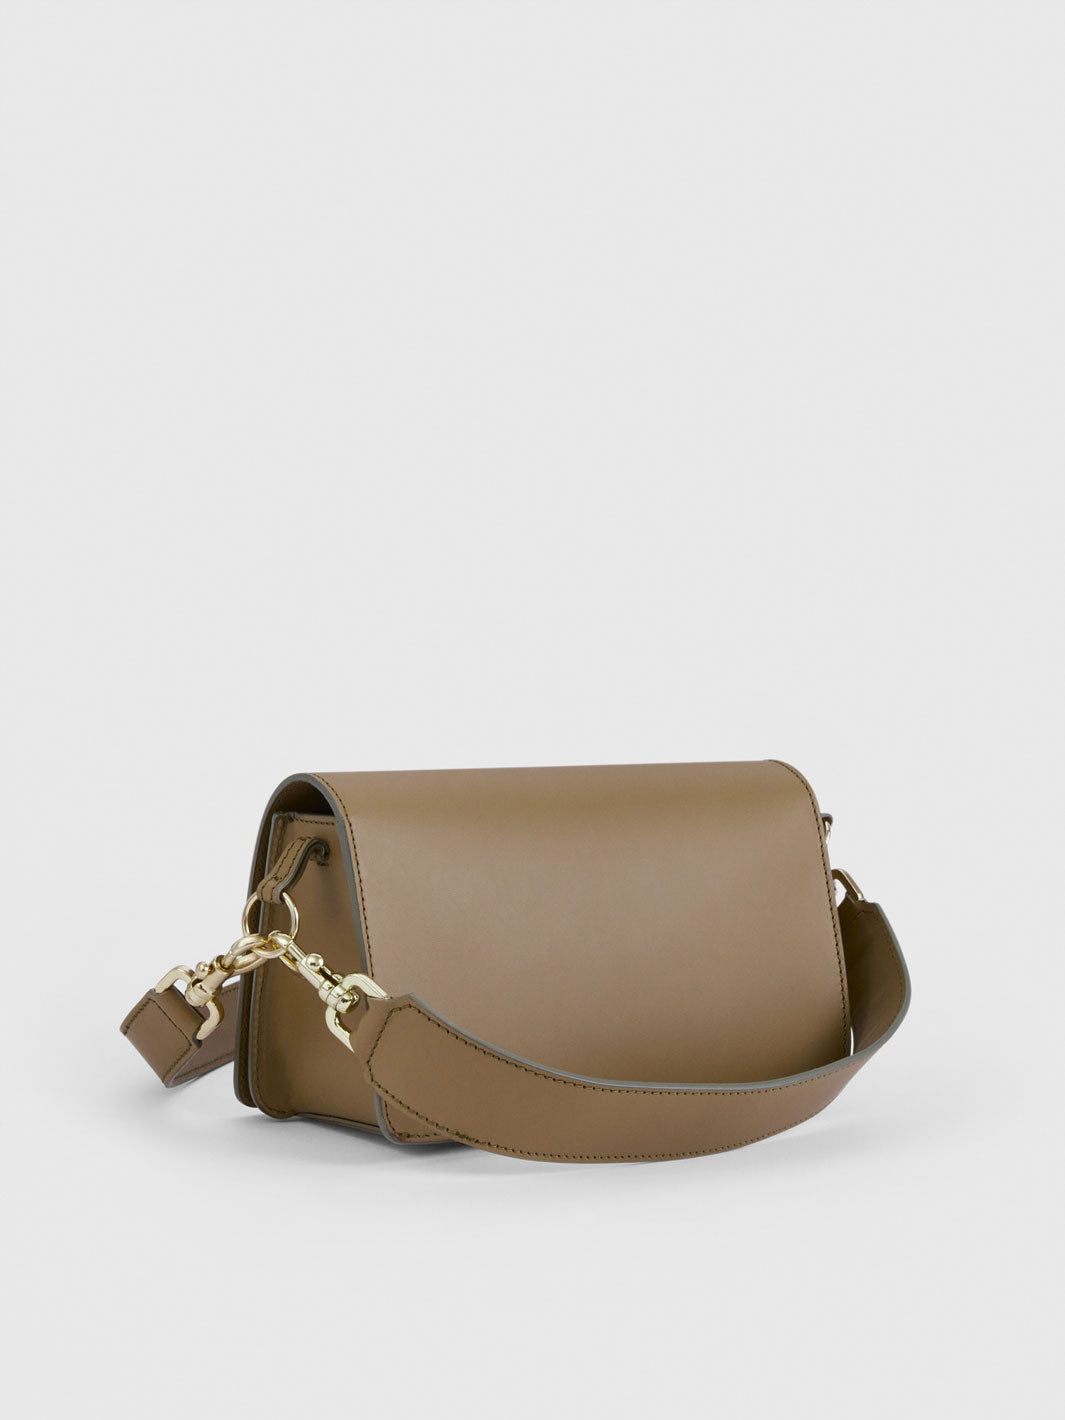 Assisi Moss Leather Shoulder Bag